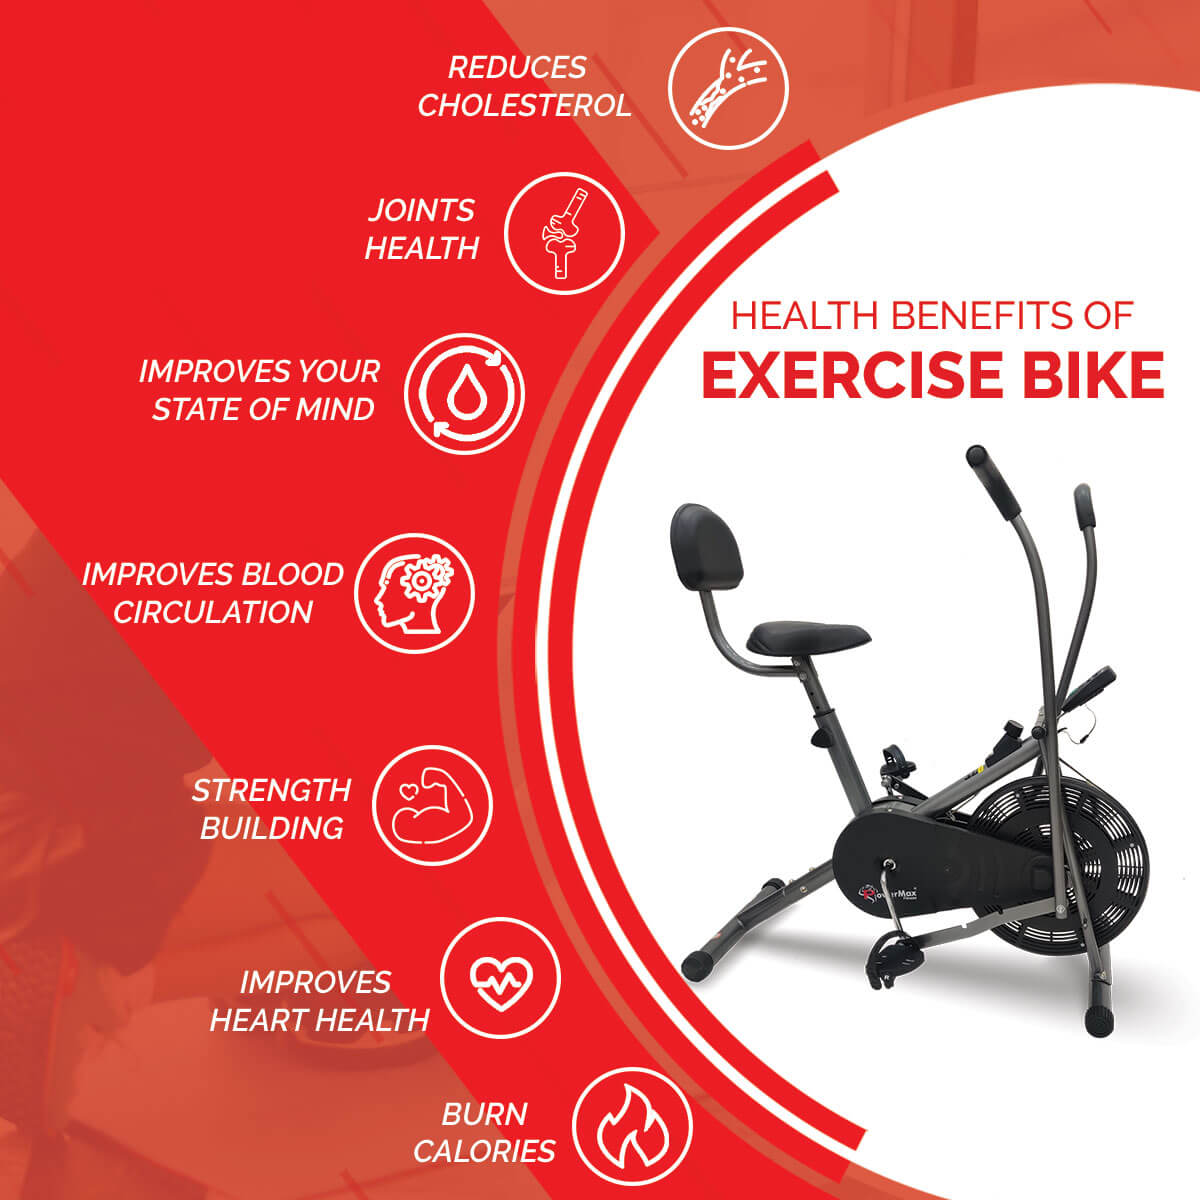 powermax fitness cycle